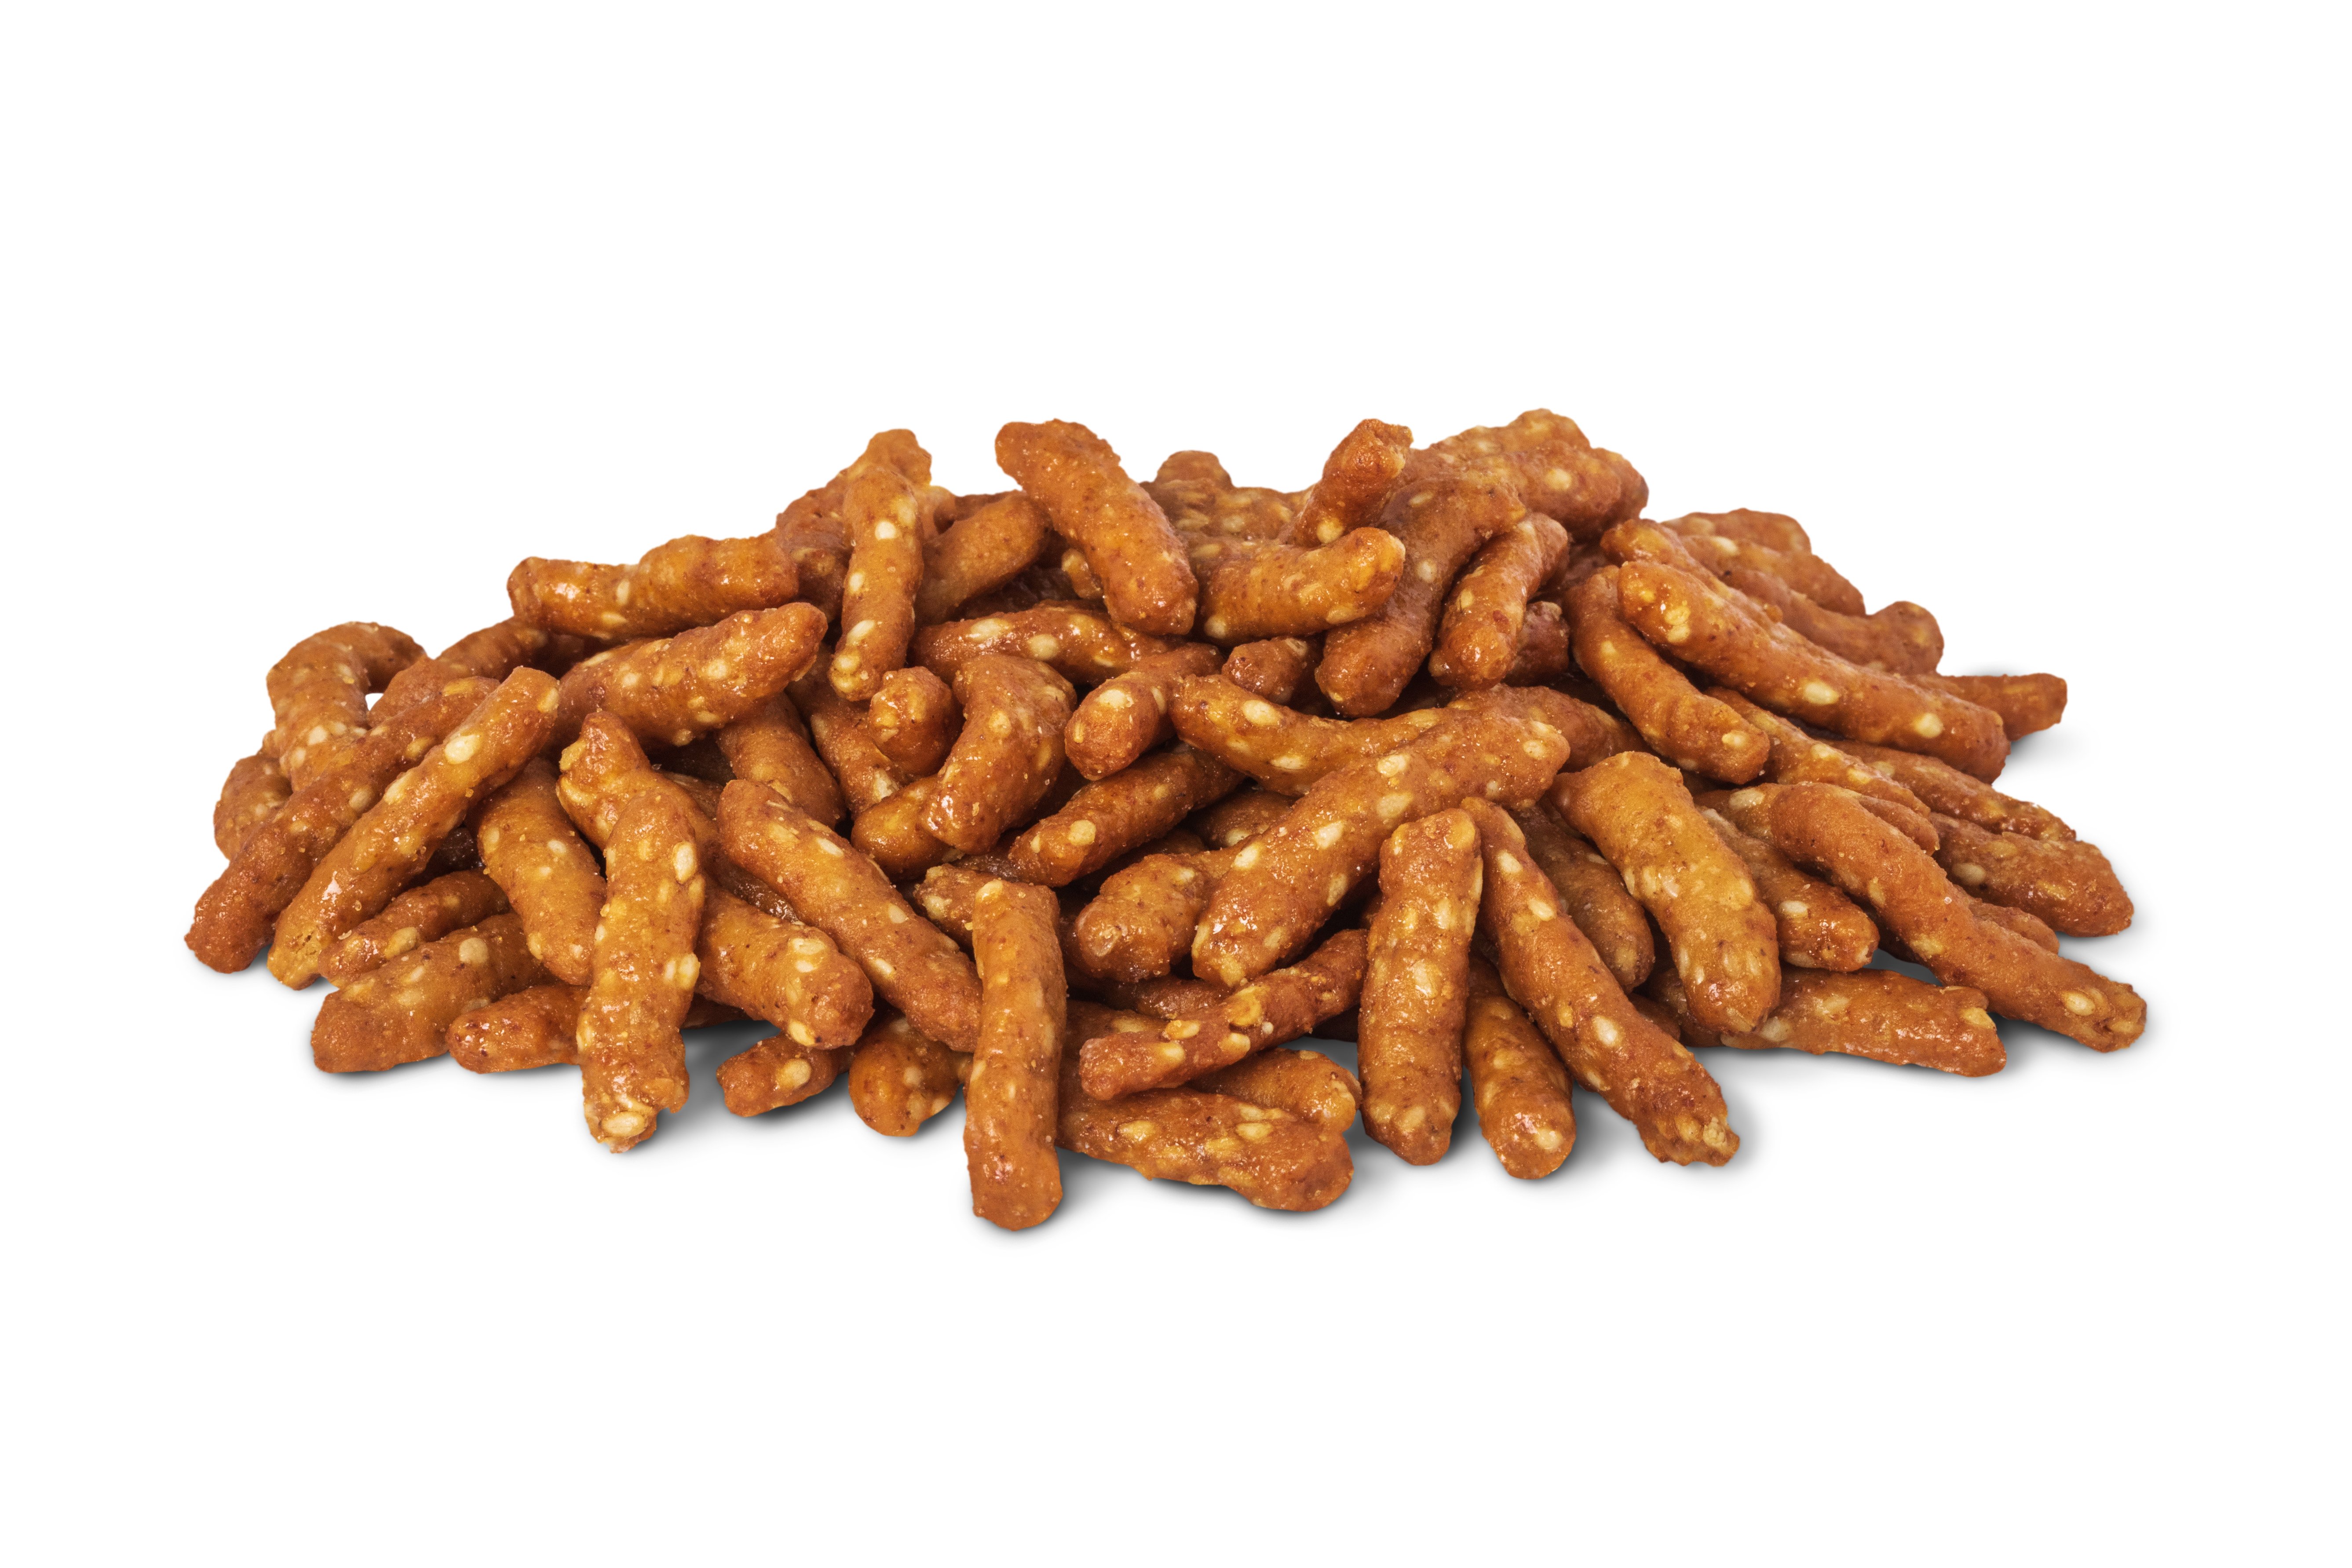 Savanna Orchards Honey Roasted Nut Mix Cashews, Almonds, Peanuts &  Macadamias